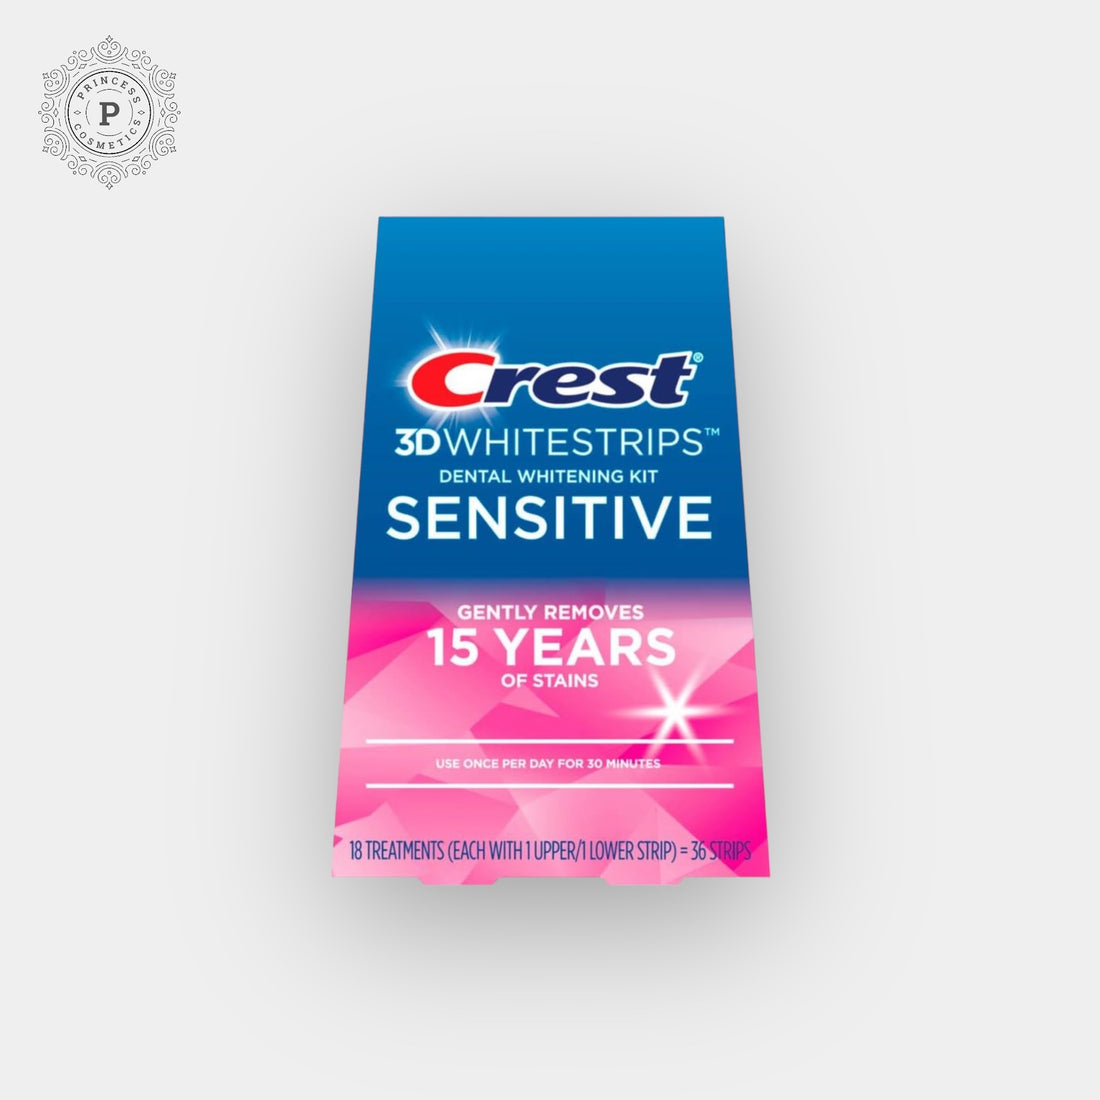 Crest 3D Whitestrips Sensitive Teeth Whitening Kit (18 Treatments,36 Strips)